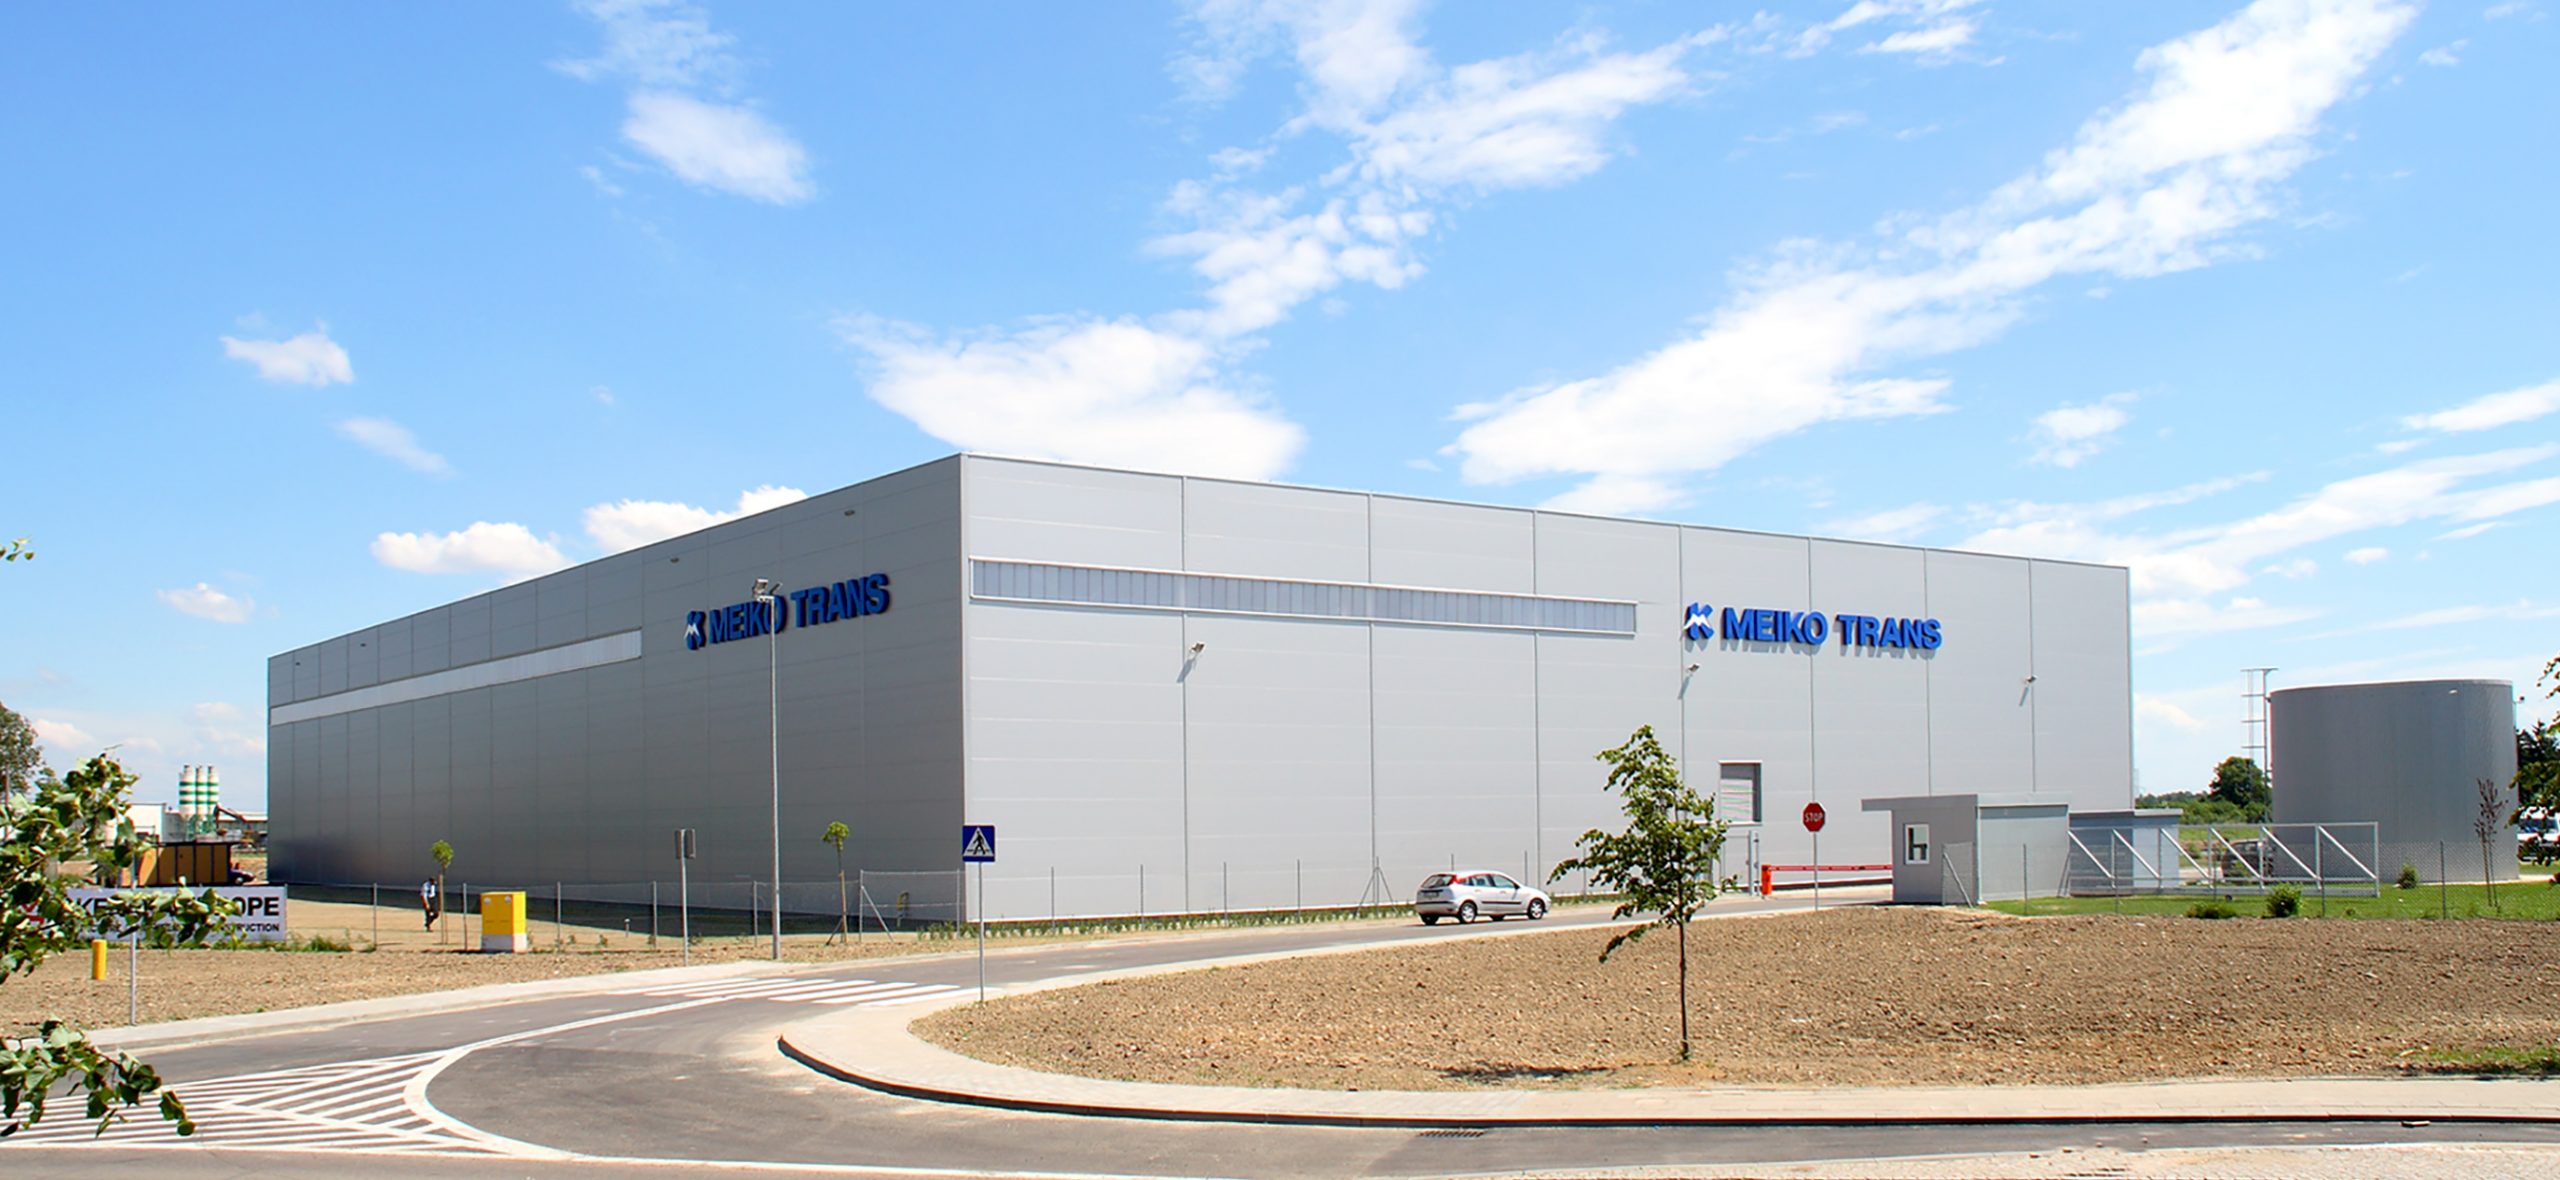 Meiko Trans Logistic Center Extension in Gilwice Poland built by Takenaka Europe